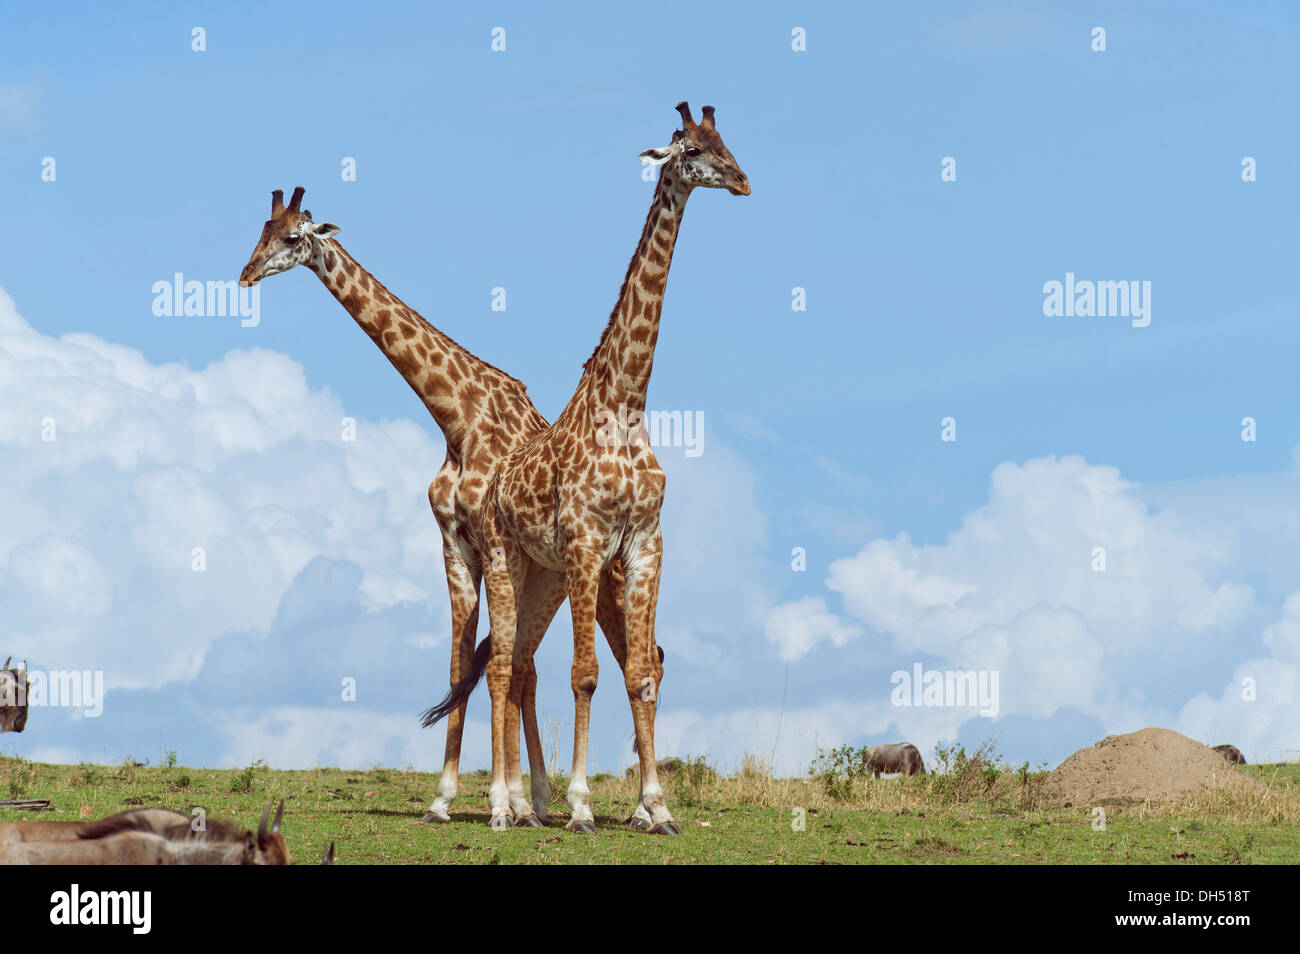 Deux girafes (Giraffa camelopardalis), les taureaux de combat, Massai Mara, Serengeti, province de la vallée du Rift, au Kenya Banque D'Images